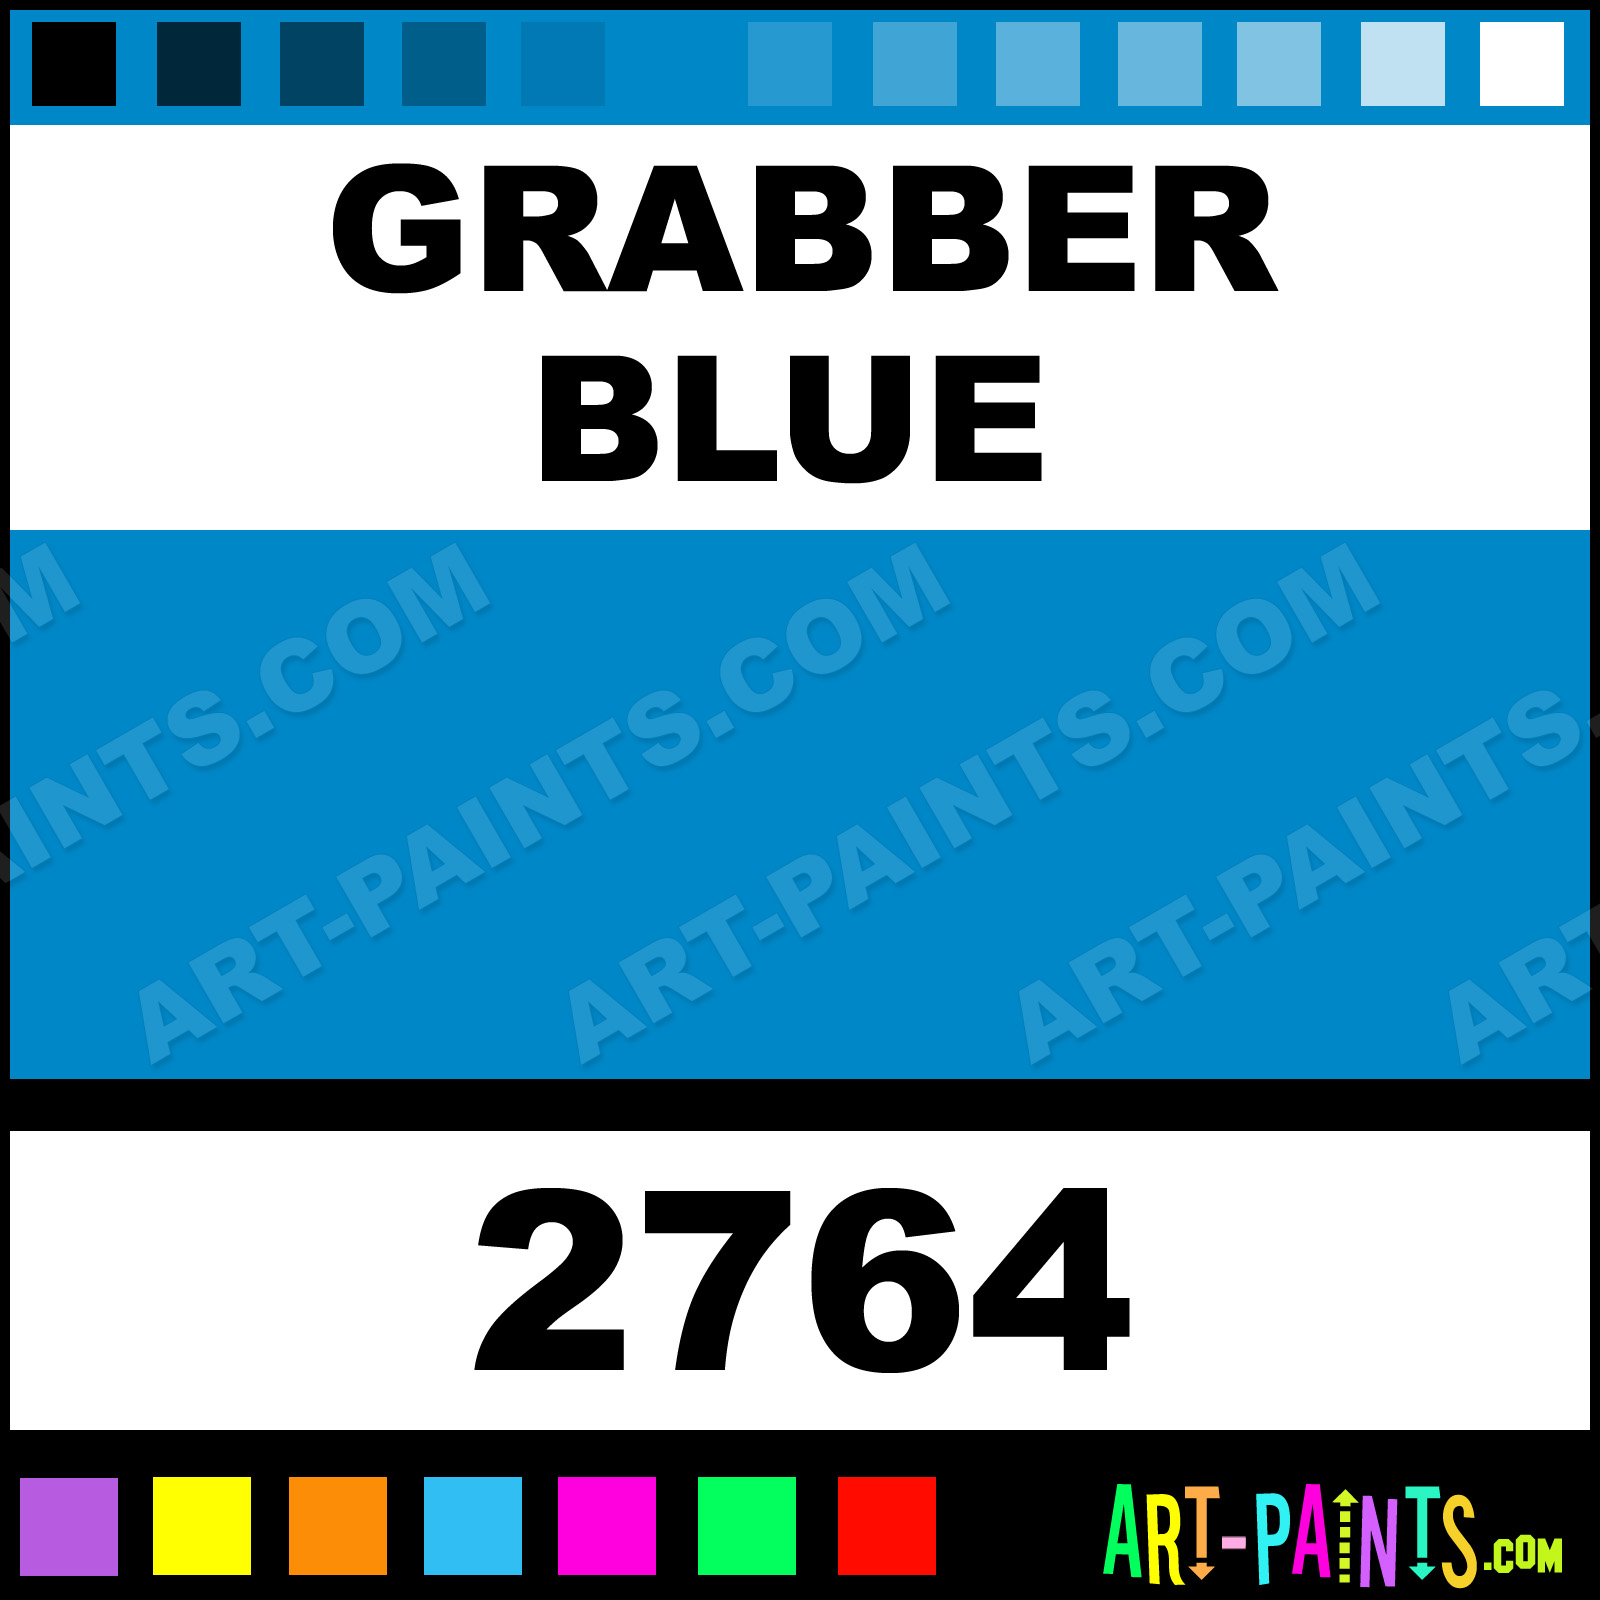 http://www.art-paints.com/Paints/Acrylic/Testors/Model-Master/Grabber-Blue/Grabber-Blue-xlg.jpg